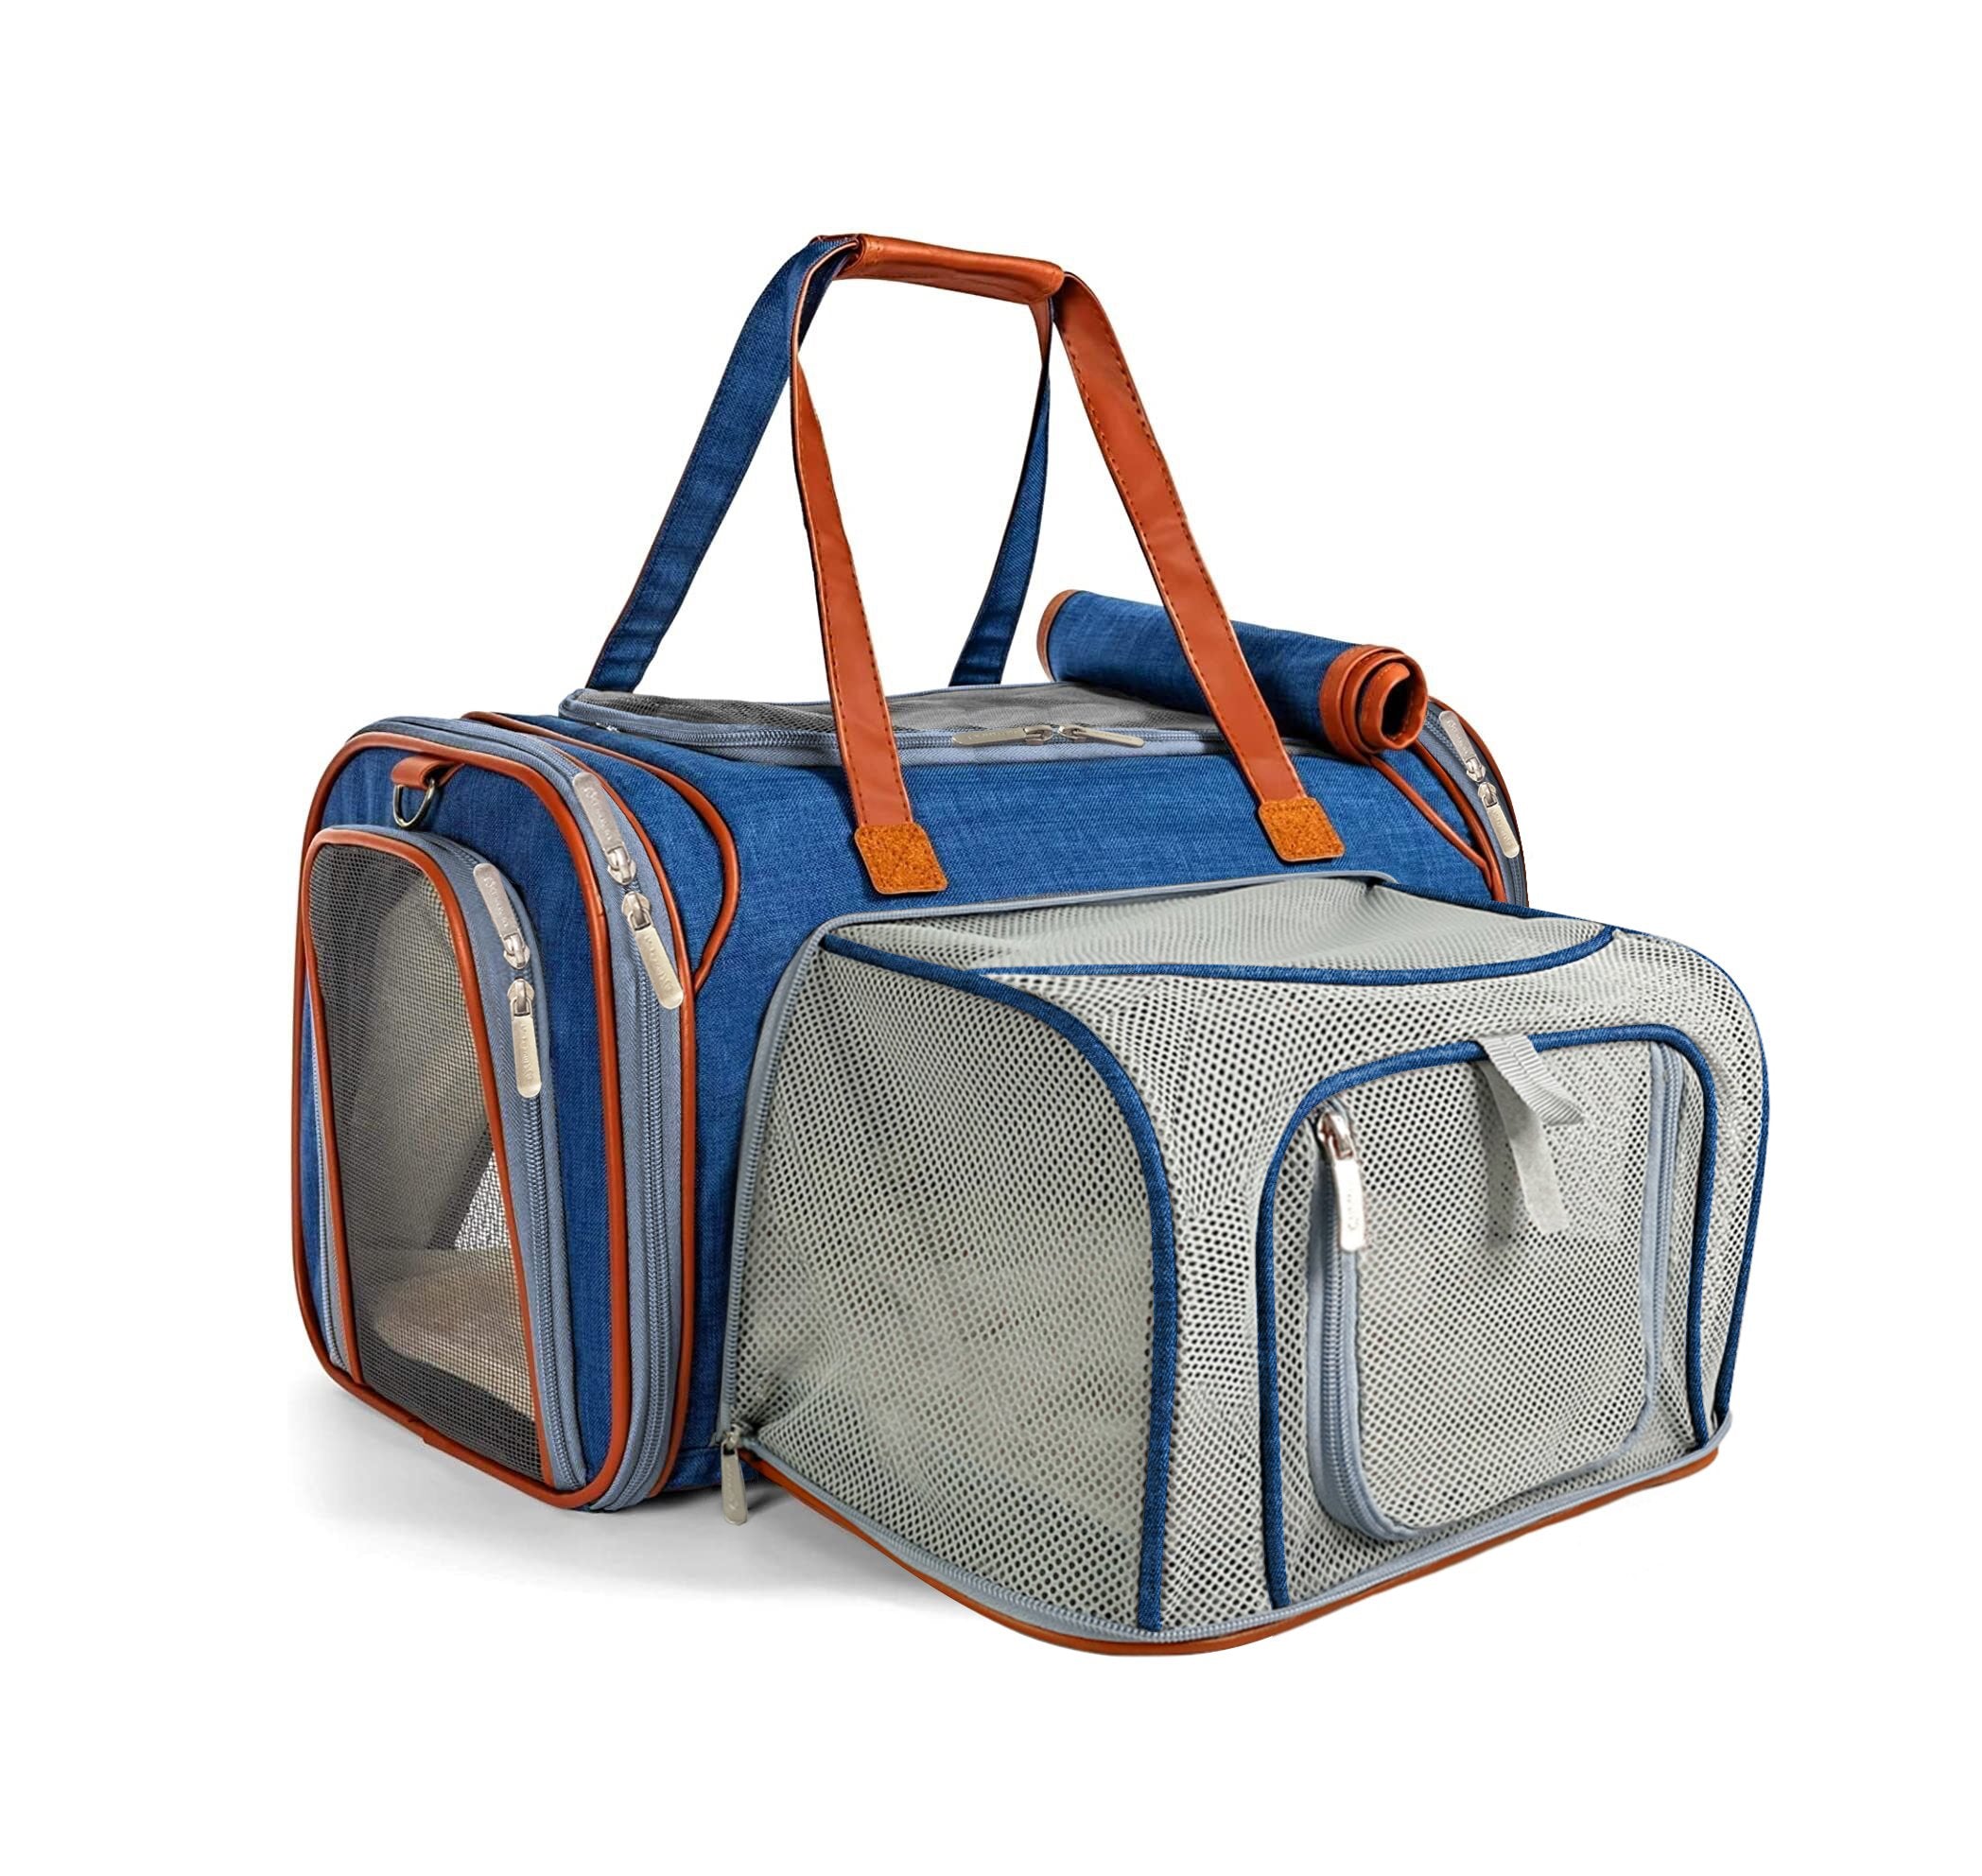 Expandable Travel Pet Carrier Bag with Fleece Pad